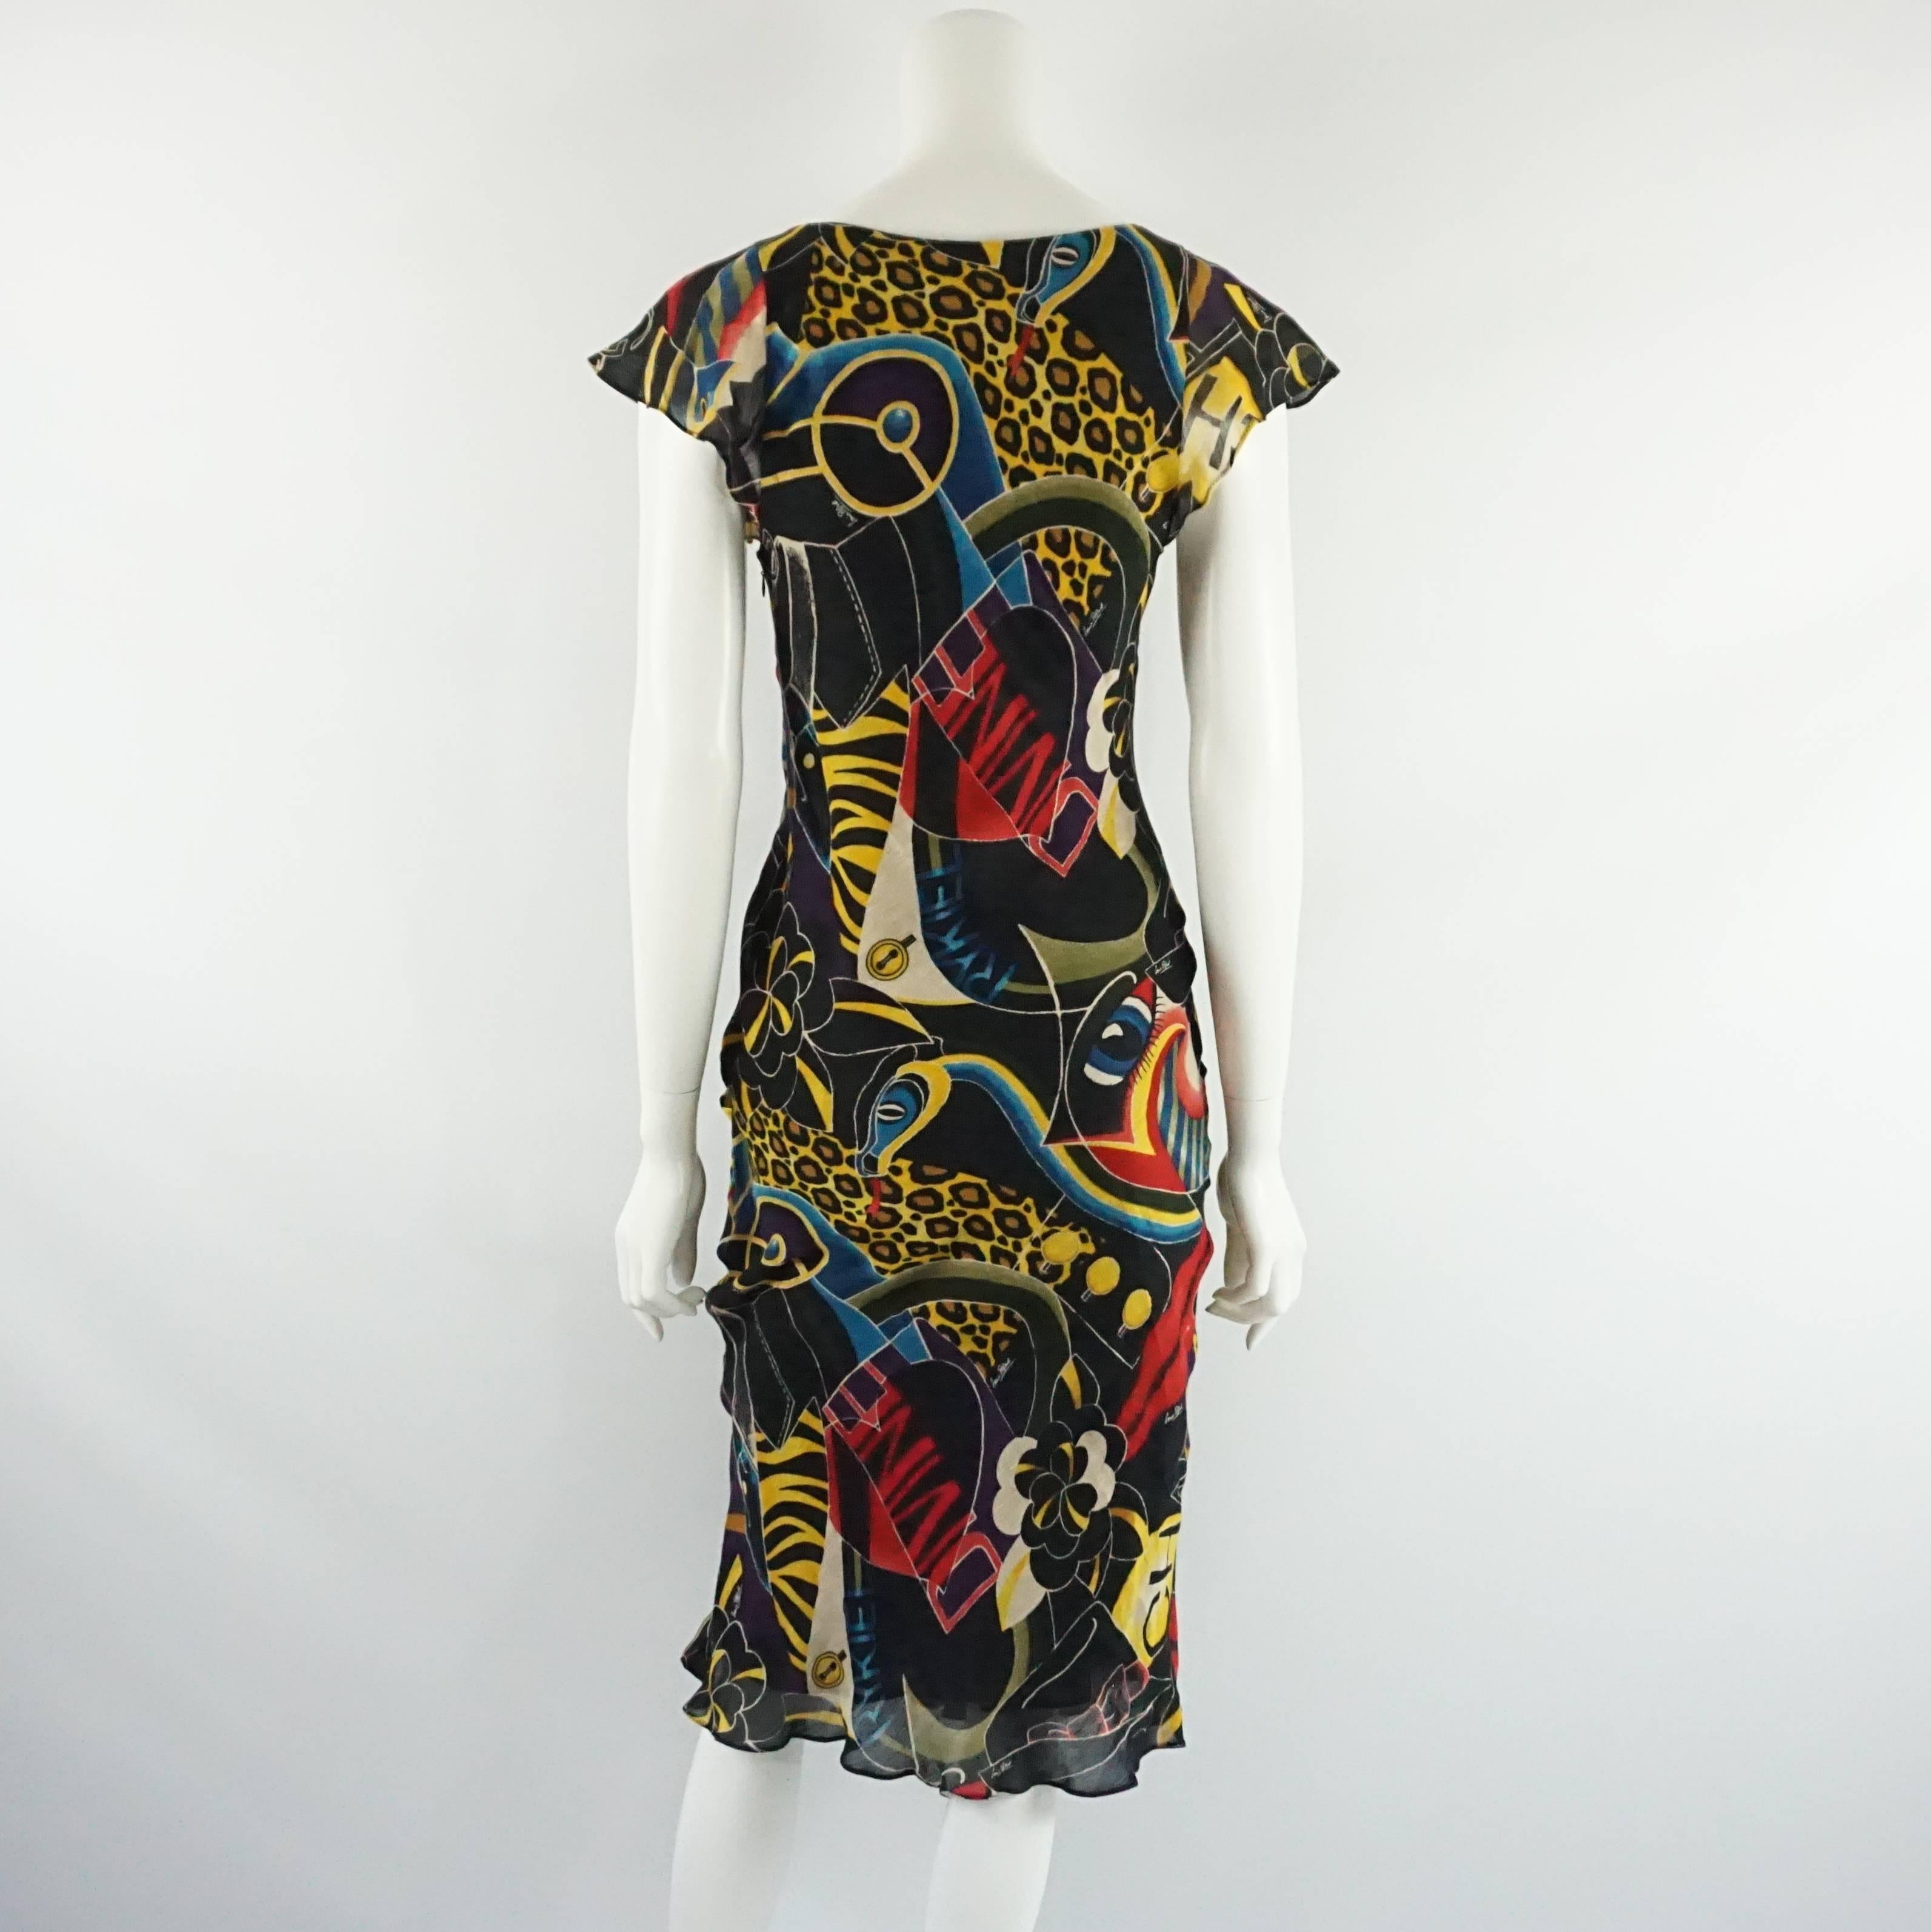 Black Sonia Rykiel Multi Pop Art Print Dress with Pockets - 36